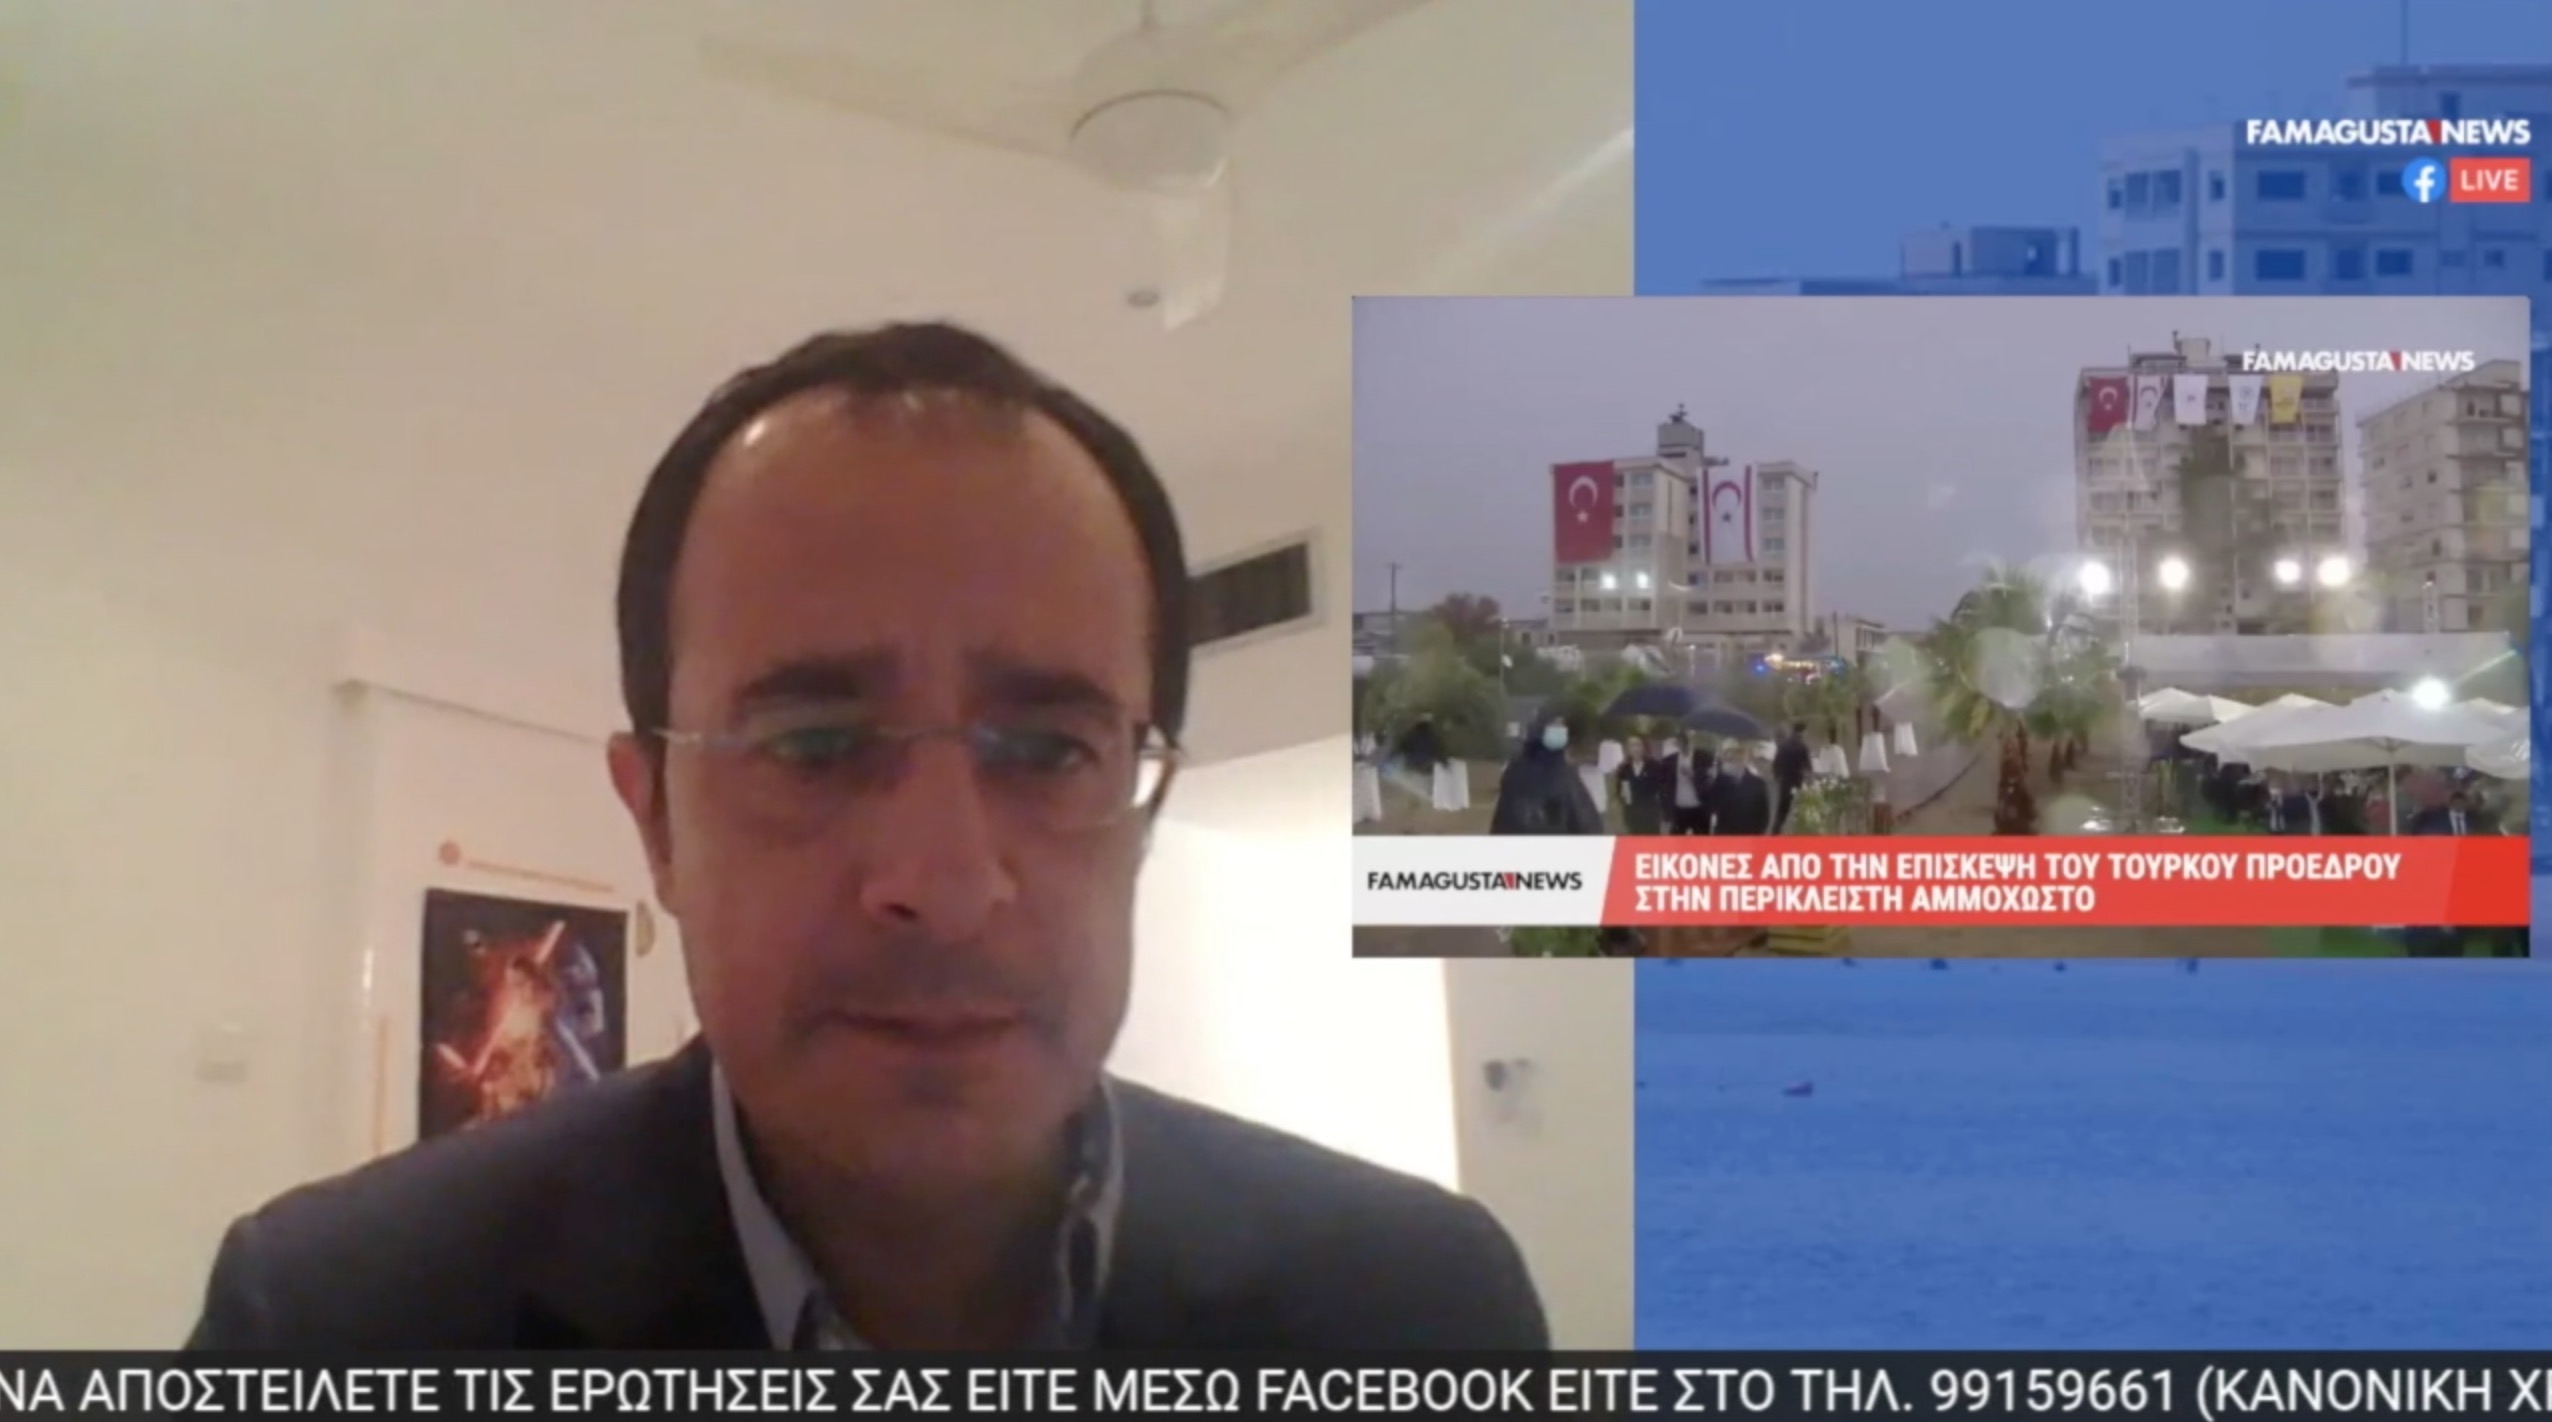 Скриншот 2020 11 23 19.28.07 FamagustaNews TV